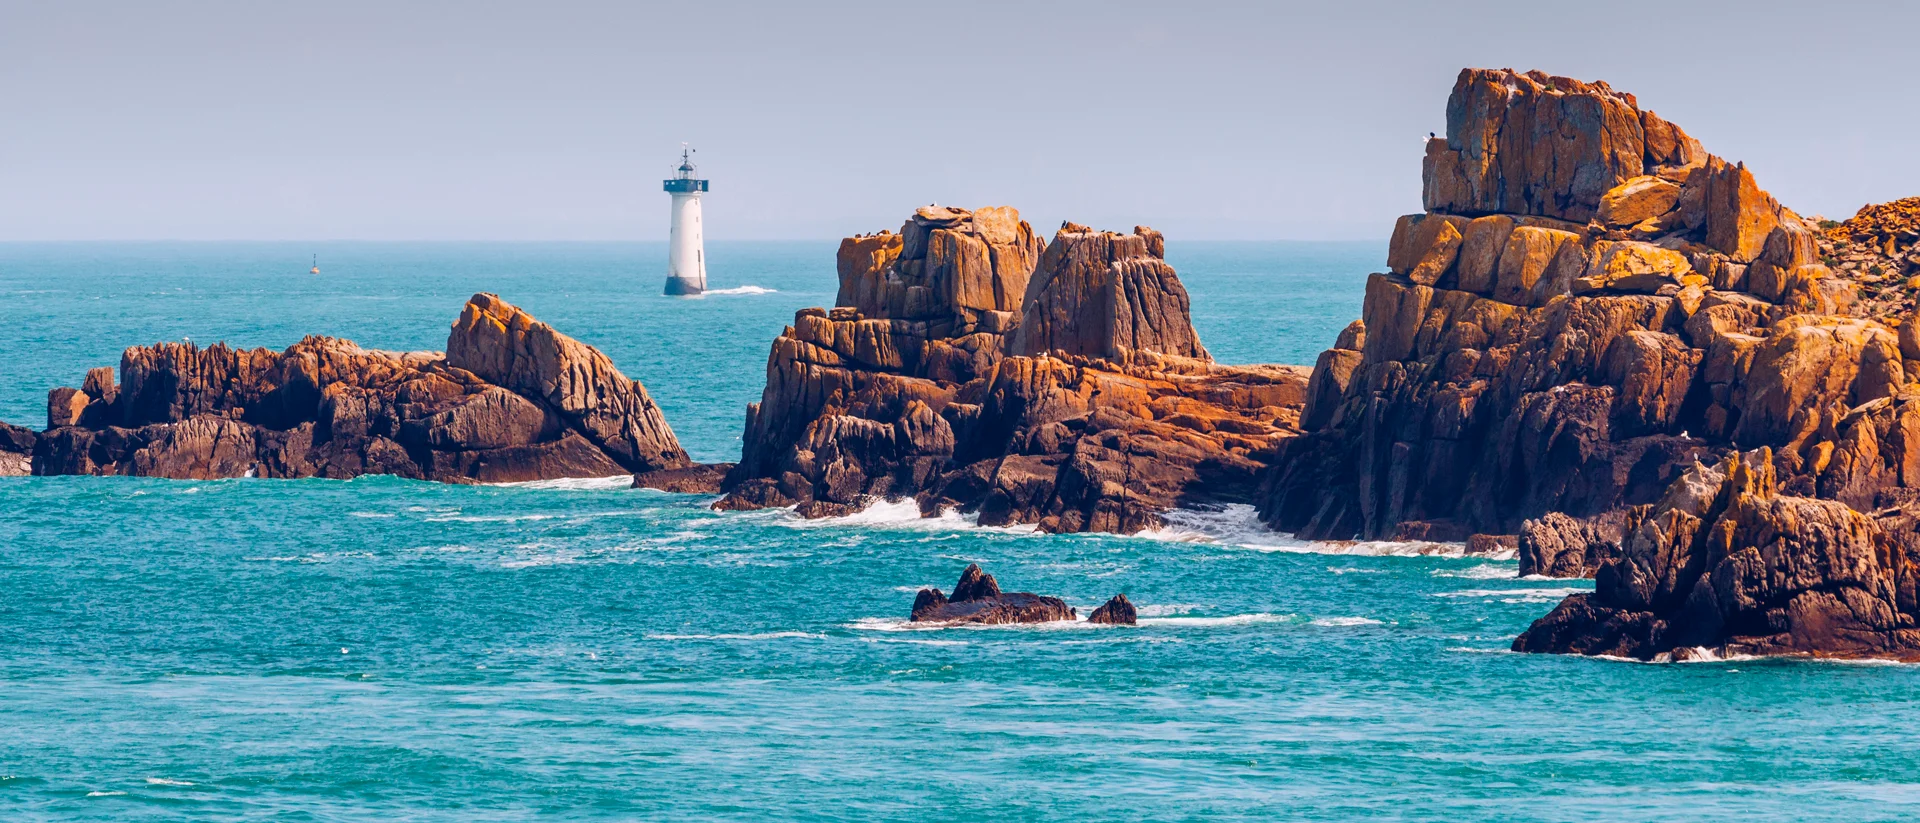 France Lighthouse island and sea